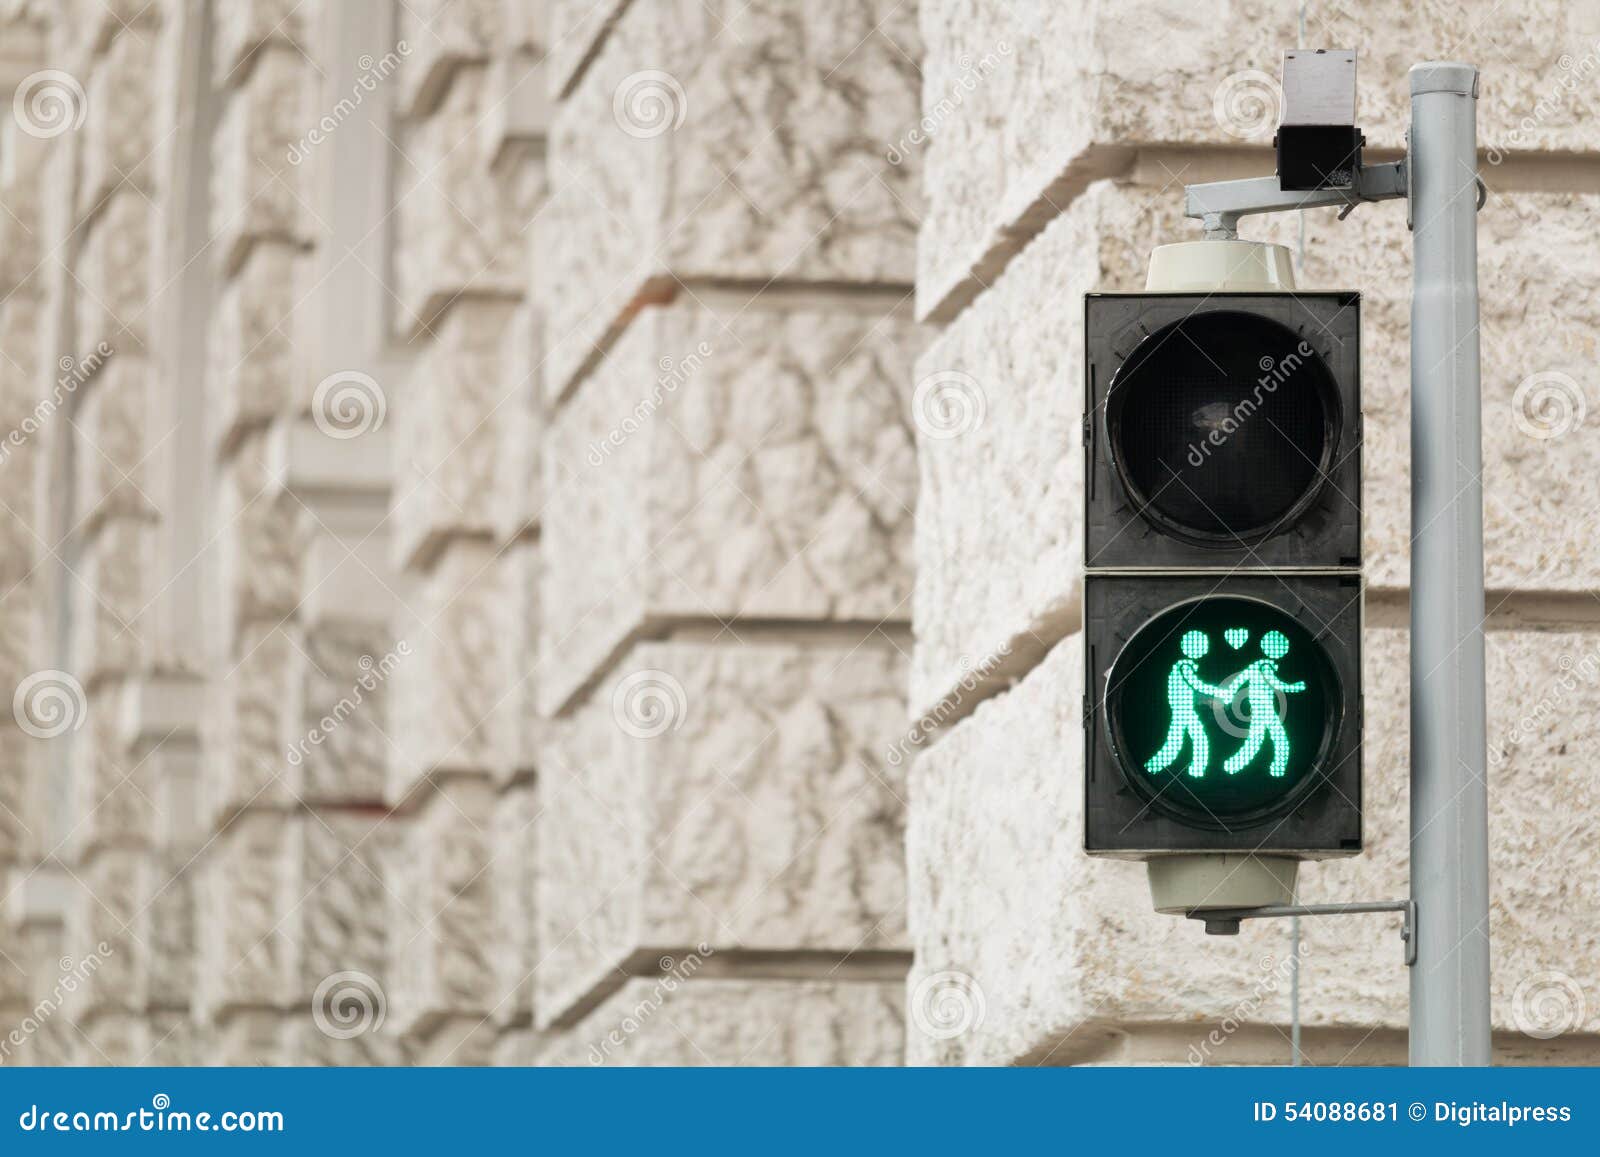 traffic light vienna for more tolerance